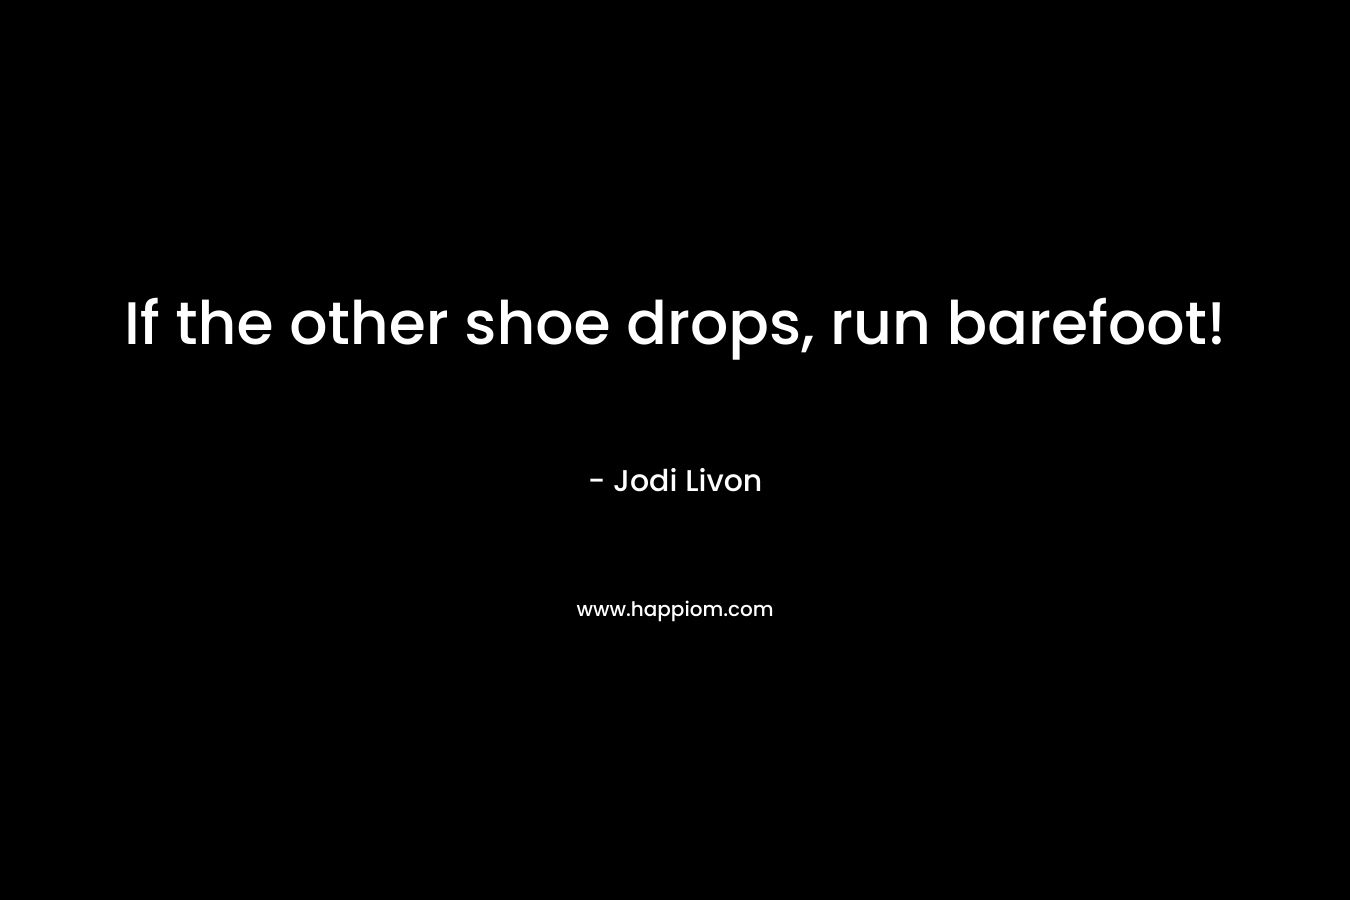 If the other shoe drops, run barefoot! – Jodi Livon